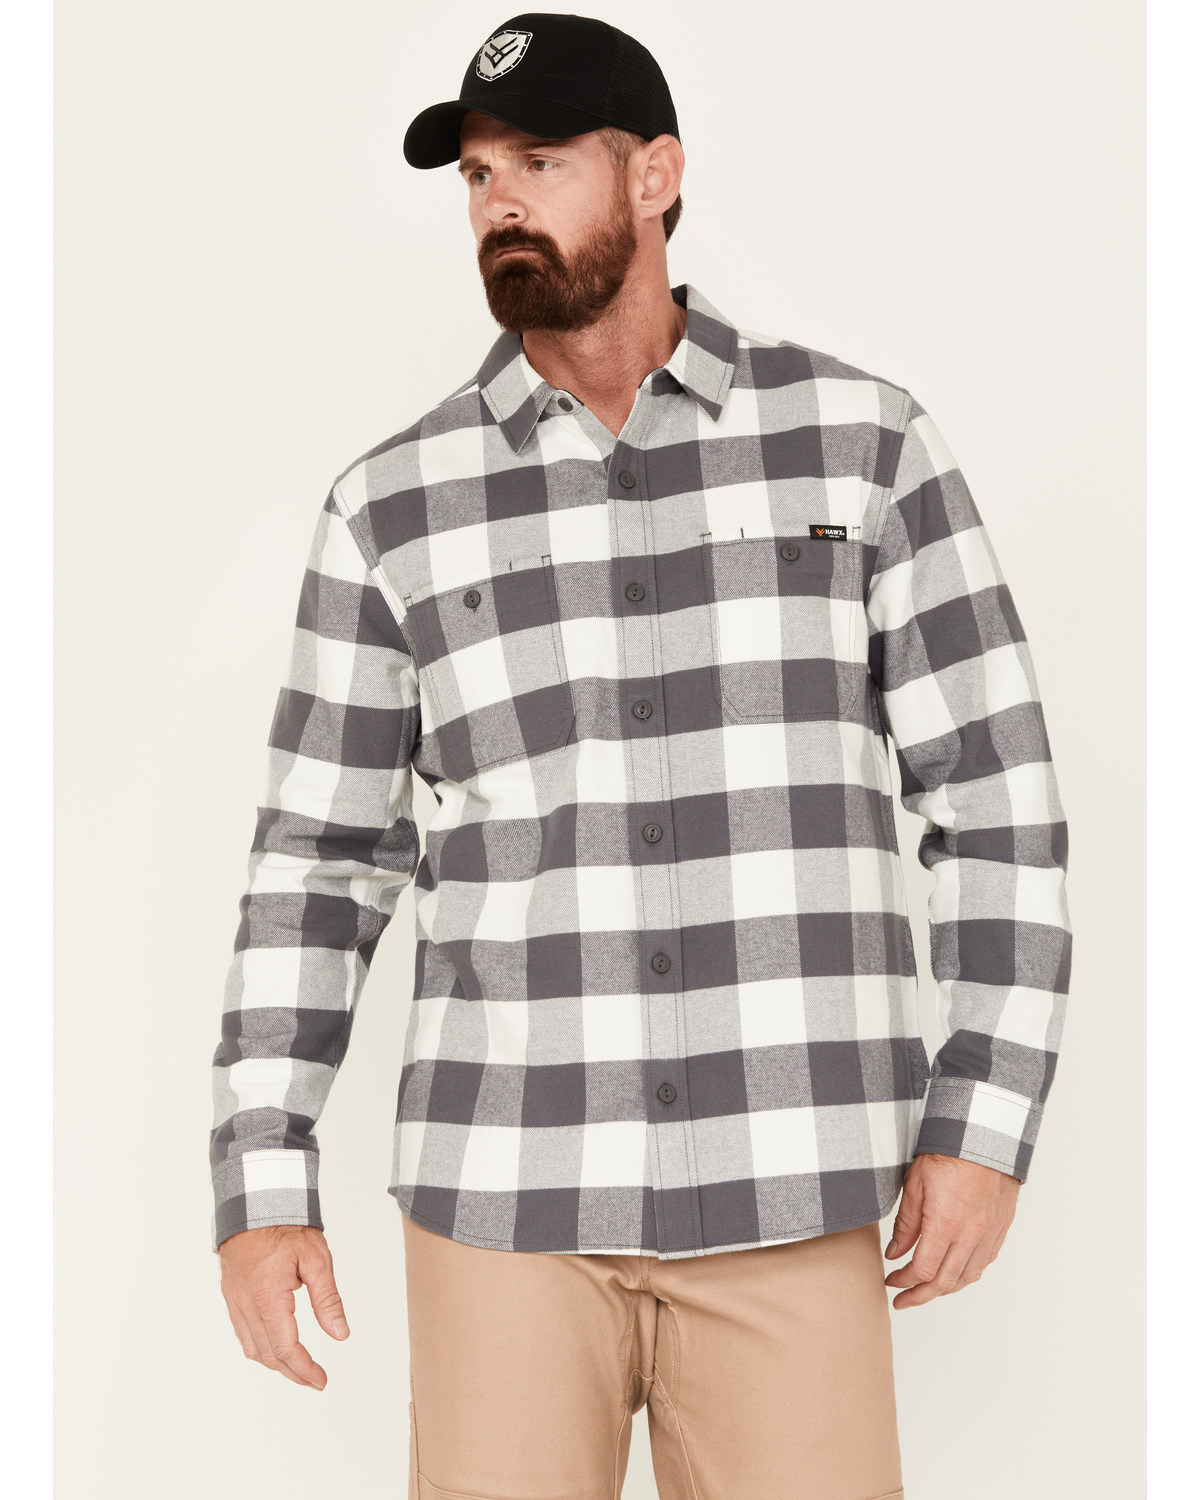 Hawx Men's Buffalo Plaid Print Flannel Work Shirt